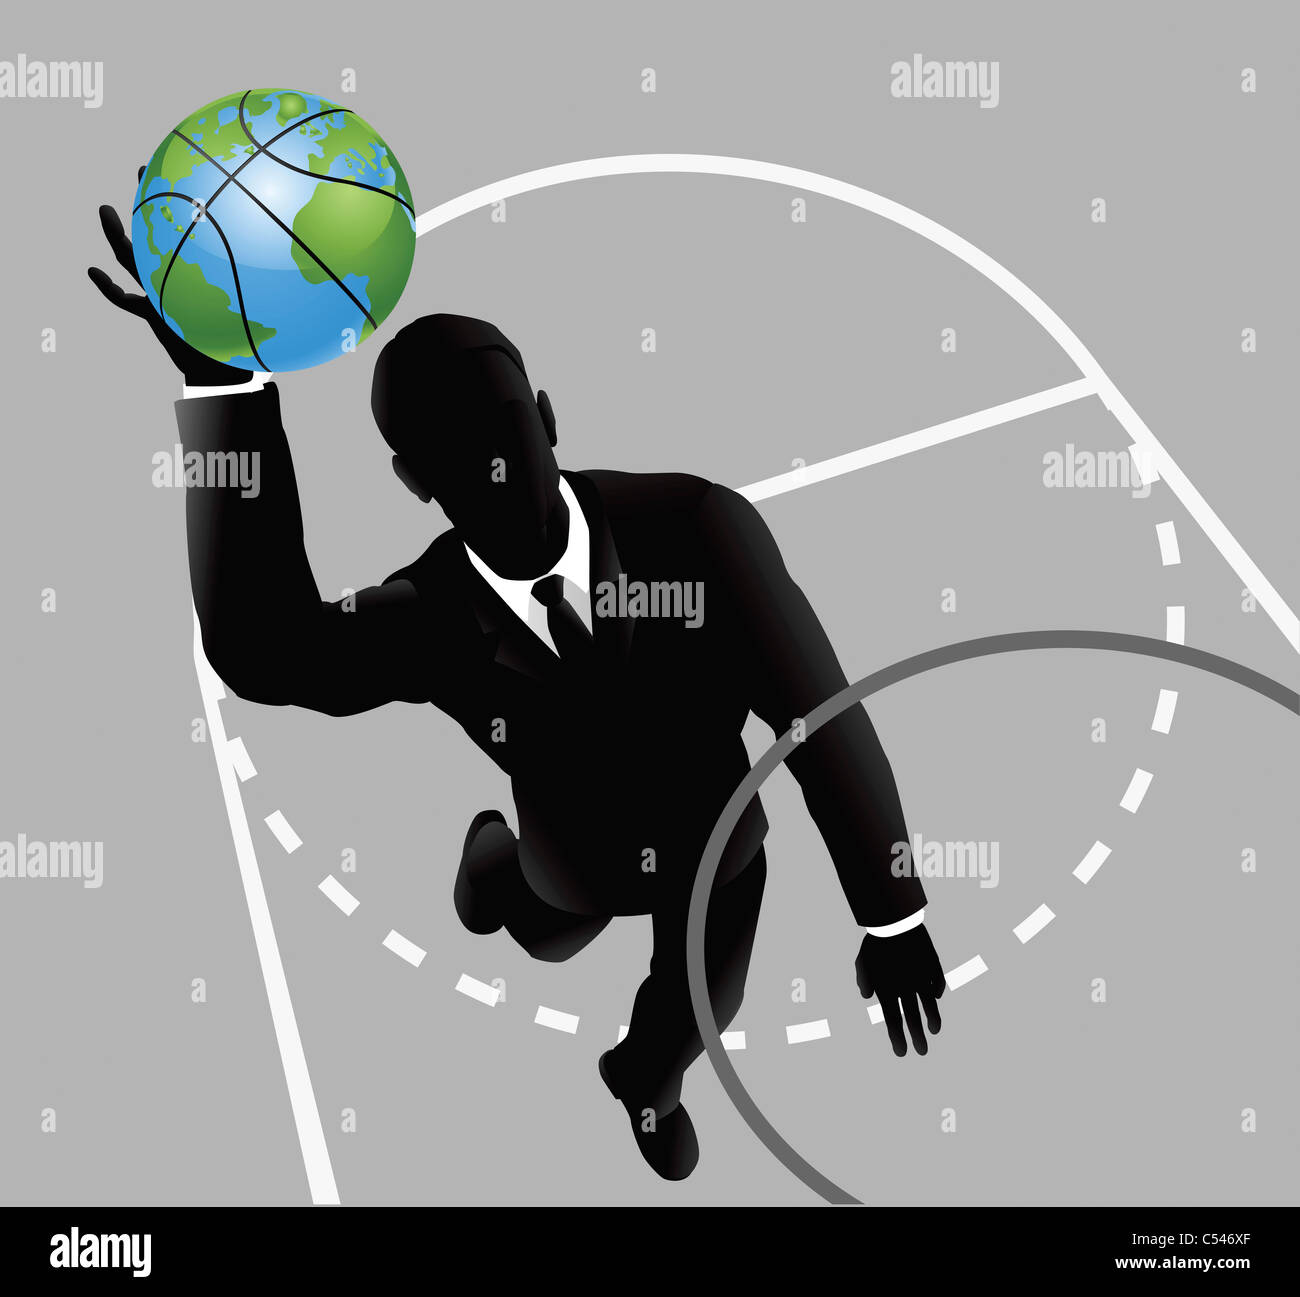 Business man slam dunking basketball concept Stock Photo